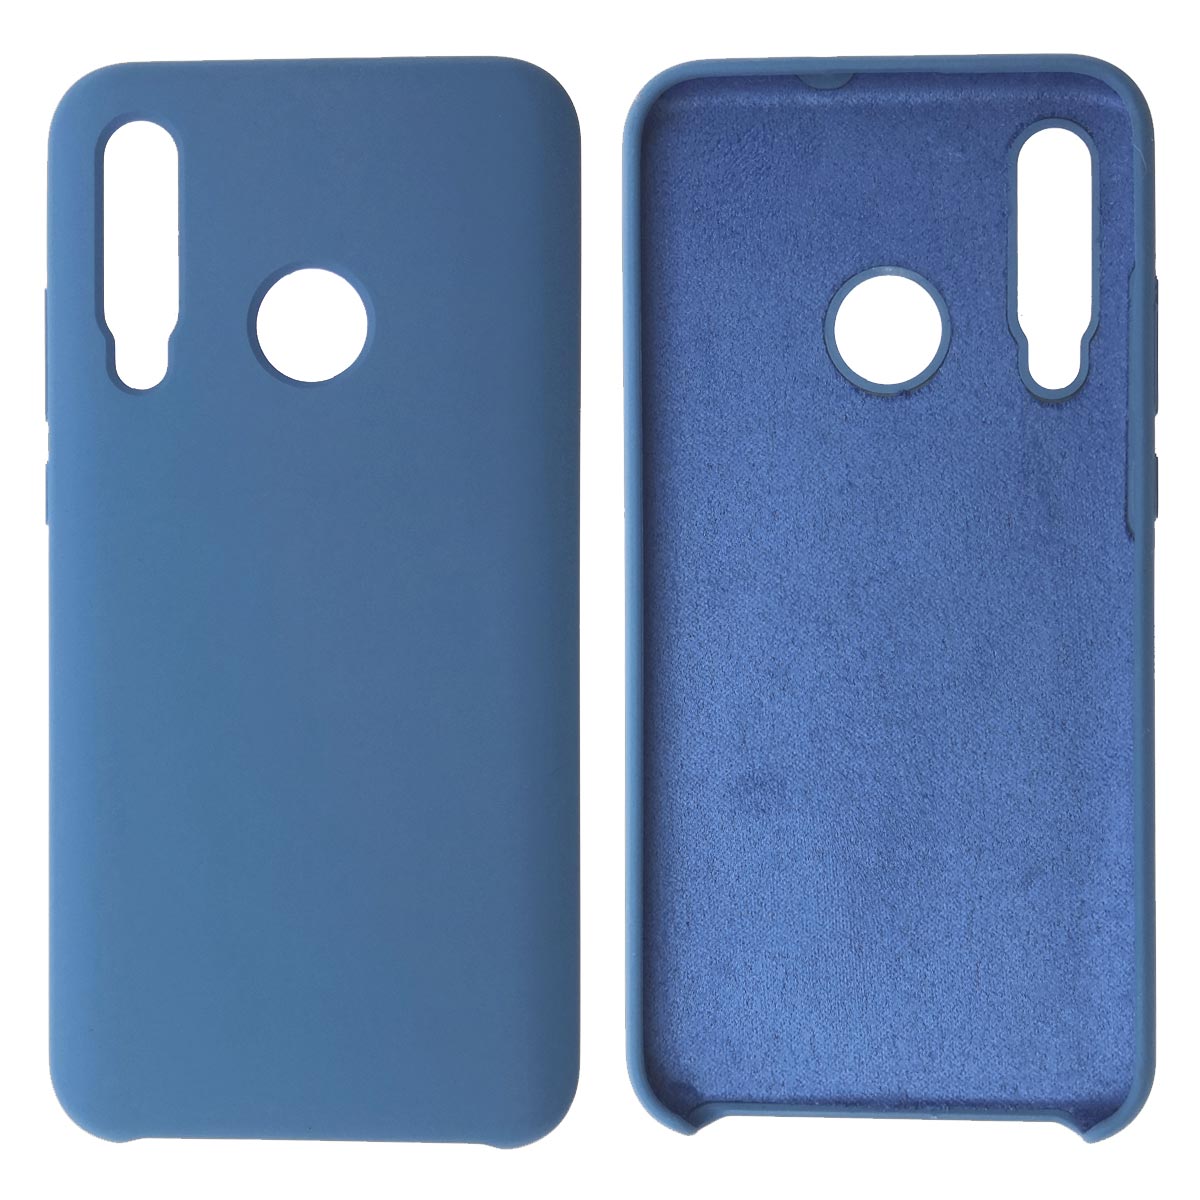 Чехол накладка Silicon Cover для HUAWEI Honor 10i, силикон, бархат, цвет джинсовый синий